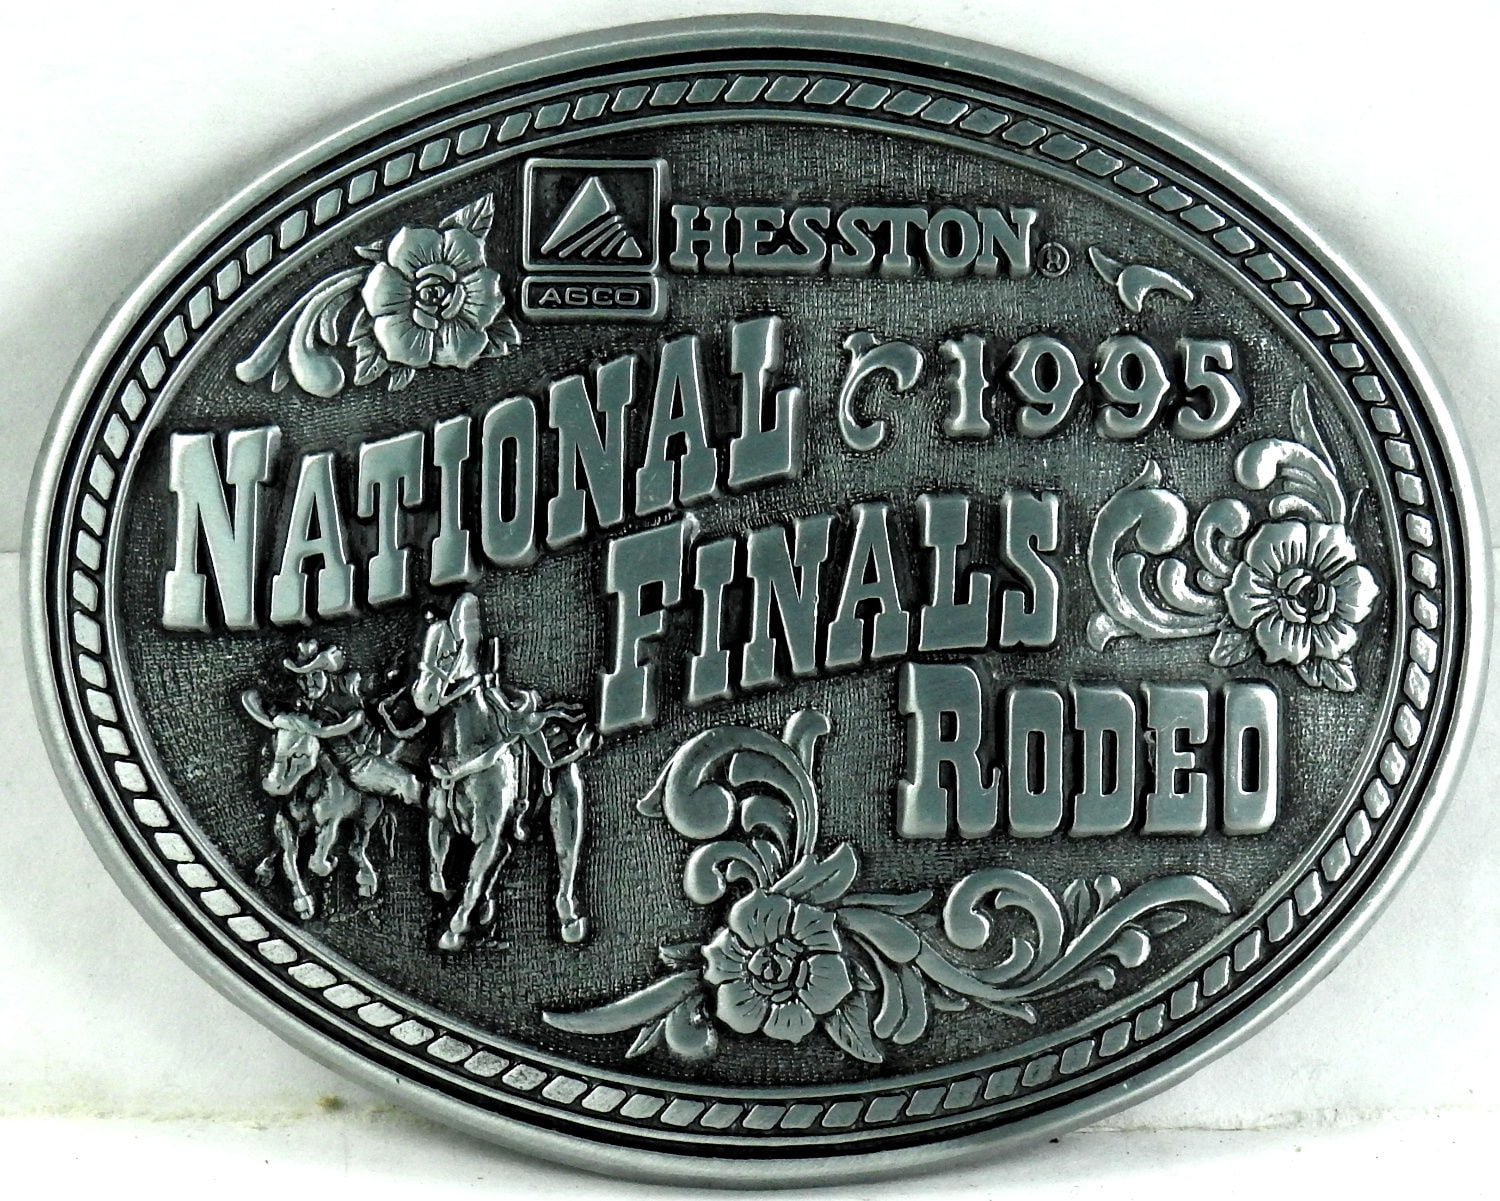 Details about   1995 Hesston National Finals Rodeo NFR Vintage Western Belt Buckle 